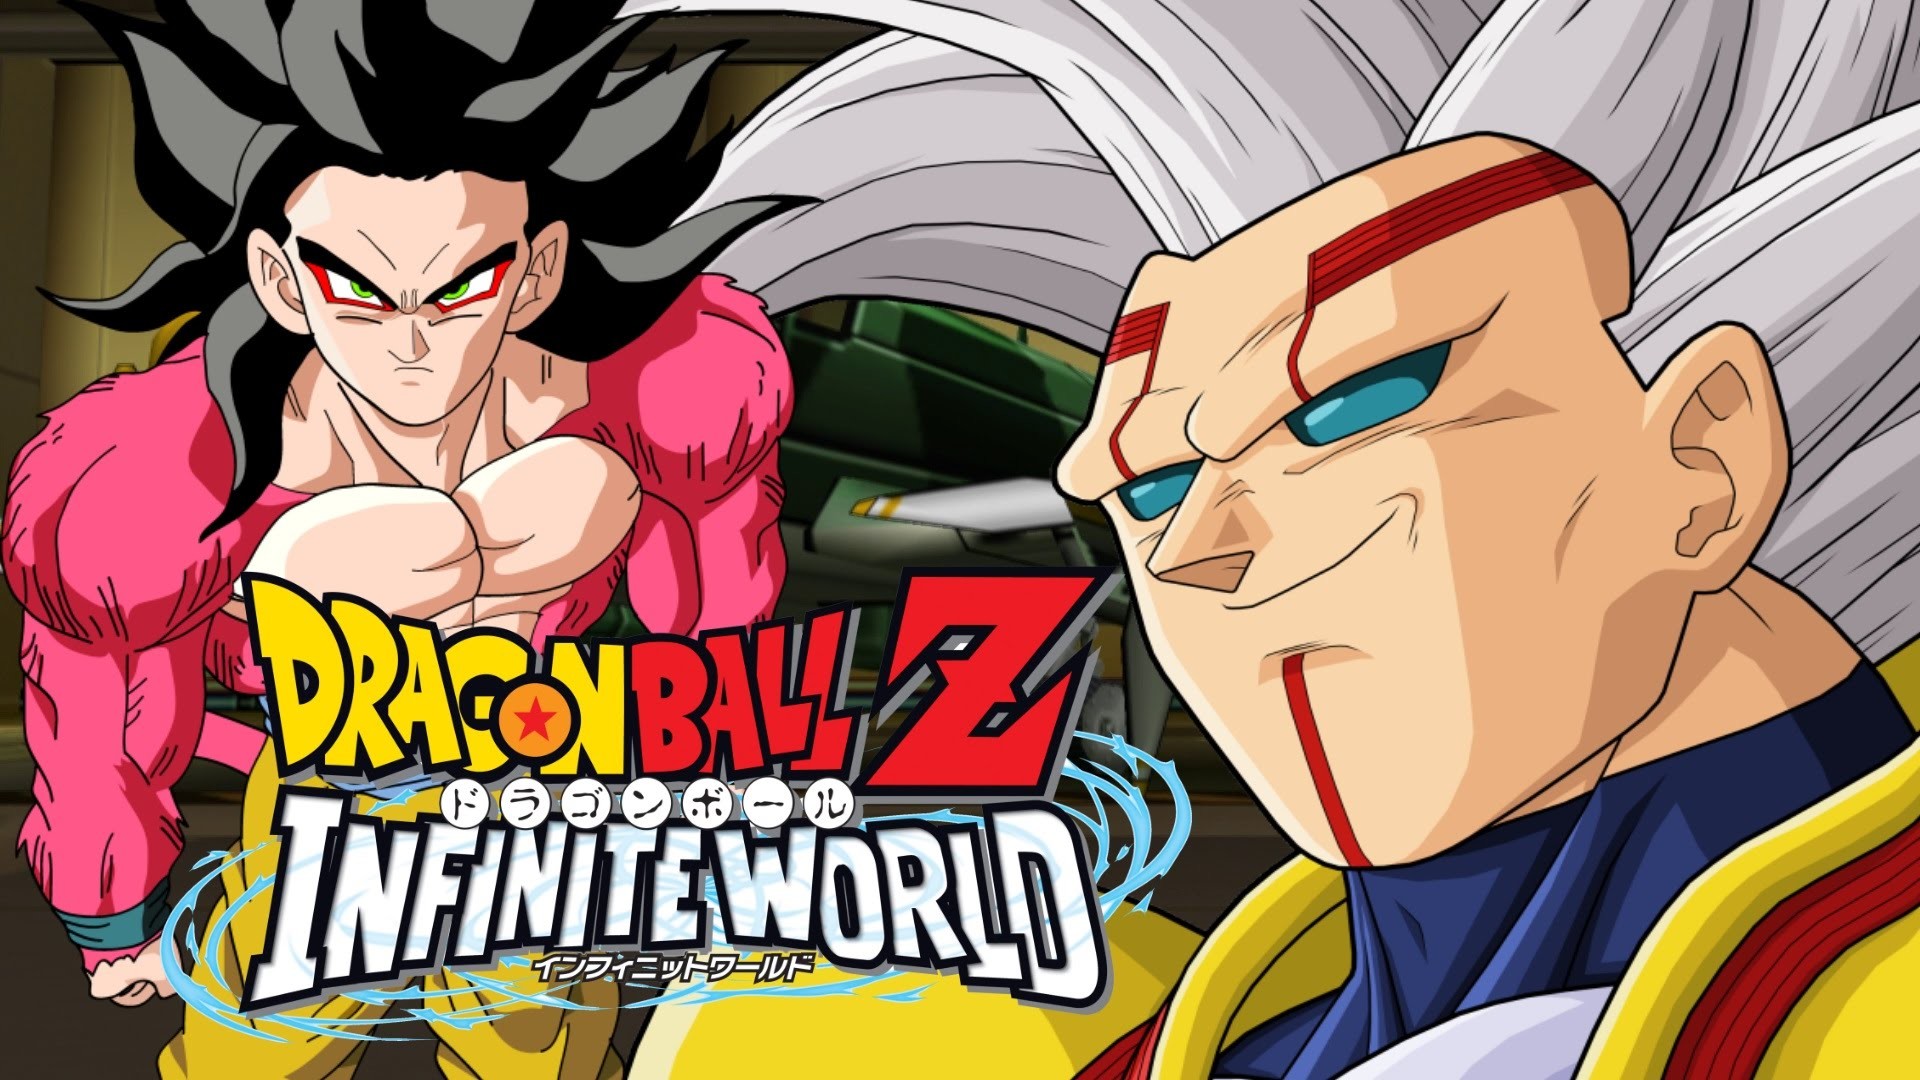 1920x1080 Dragon Ball Z Infinite World - SSJ4 Goku vs Super Baby Vegeta BEST QUALITY  - YouTube